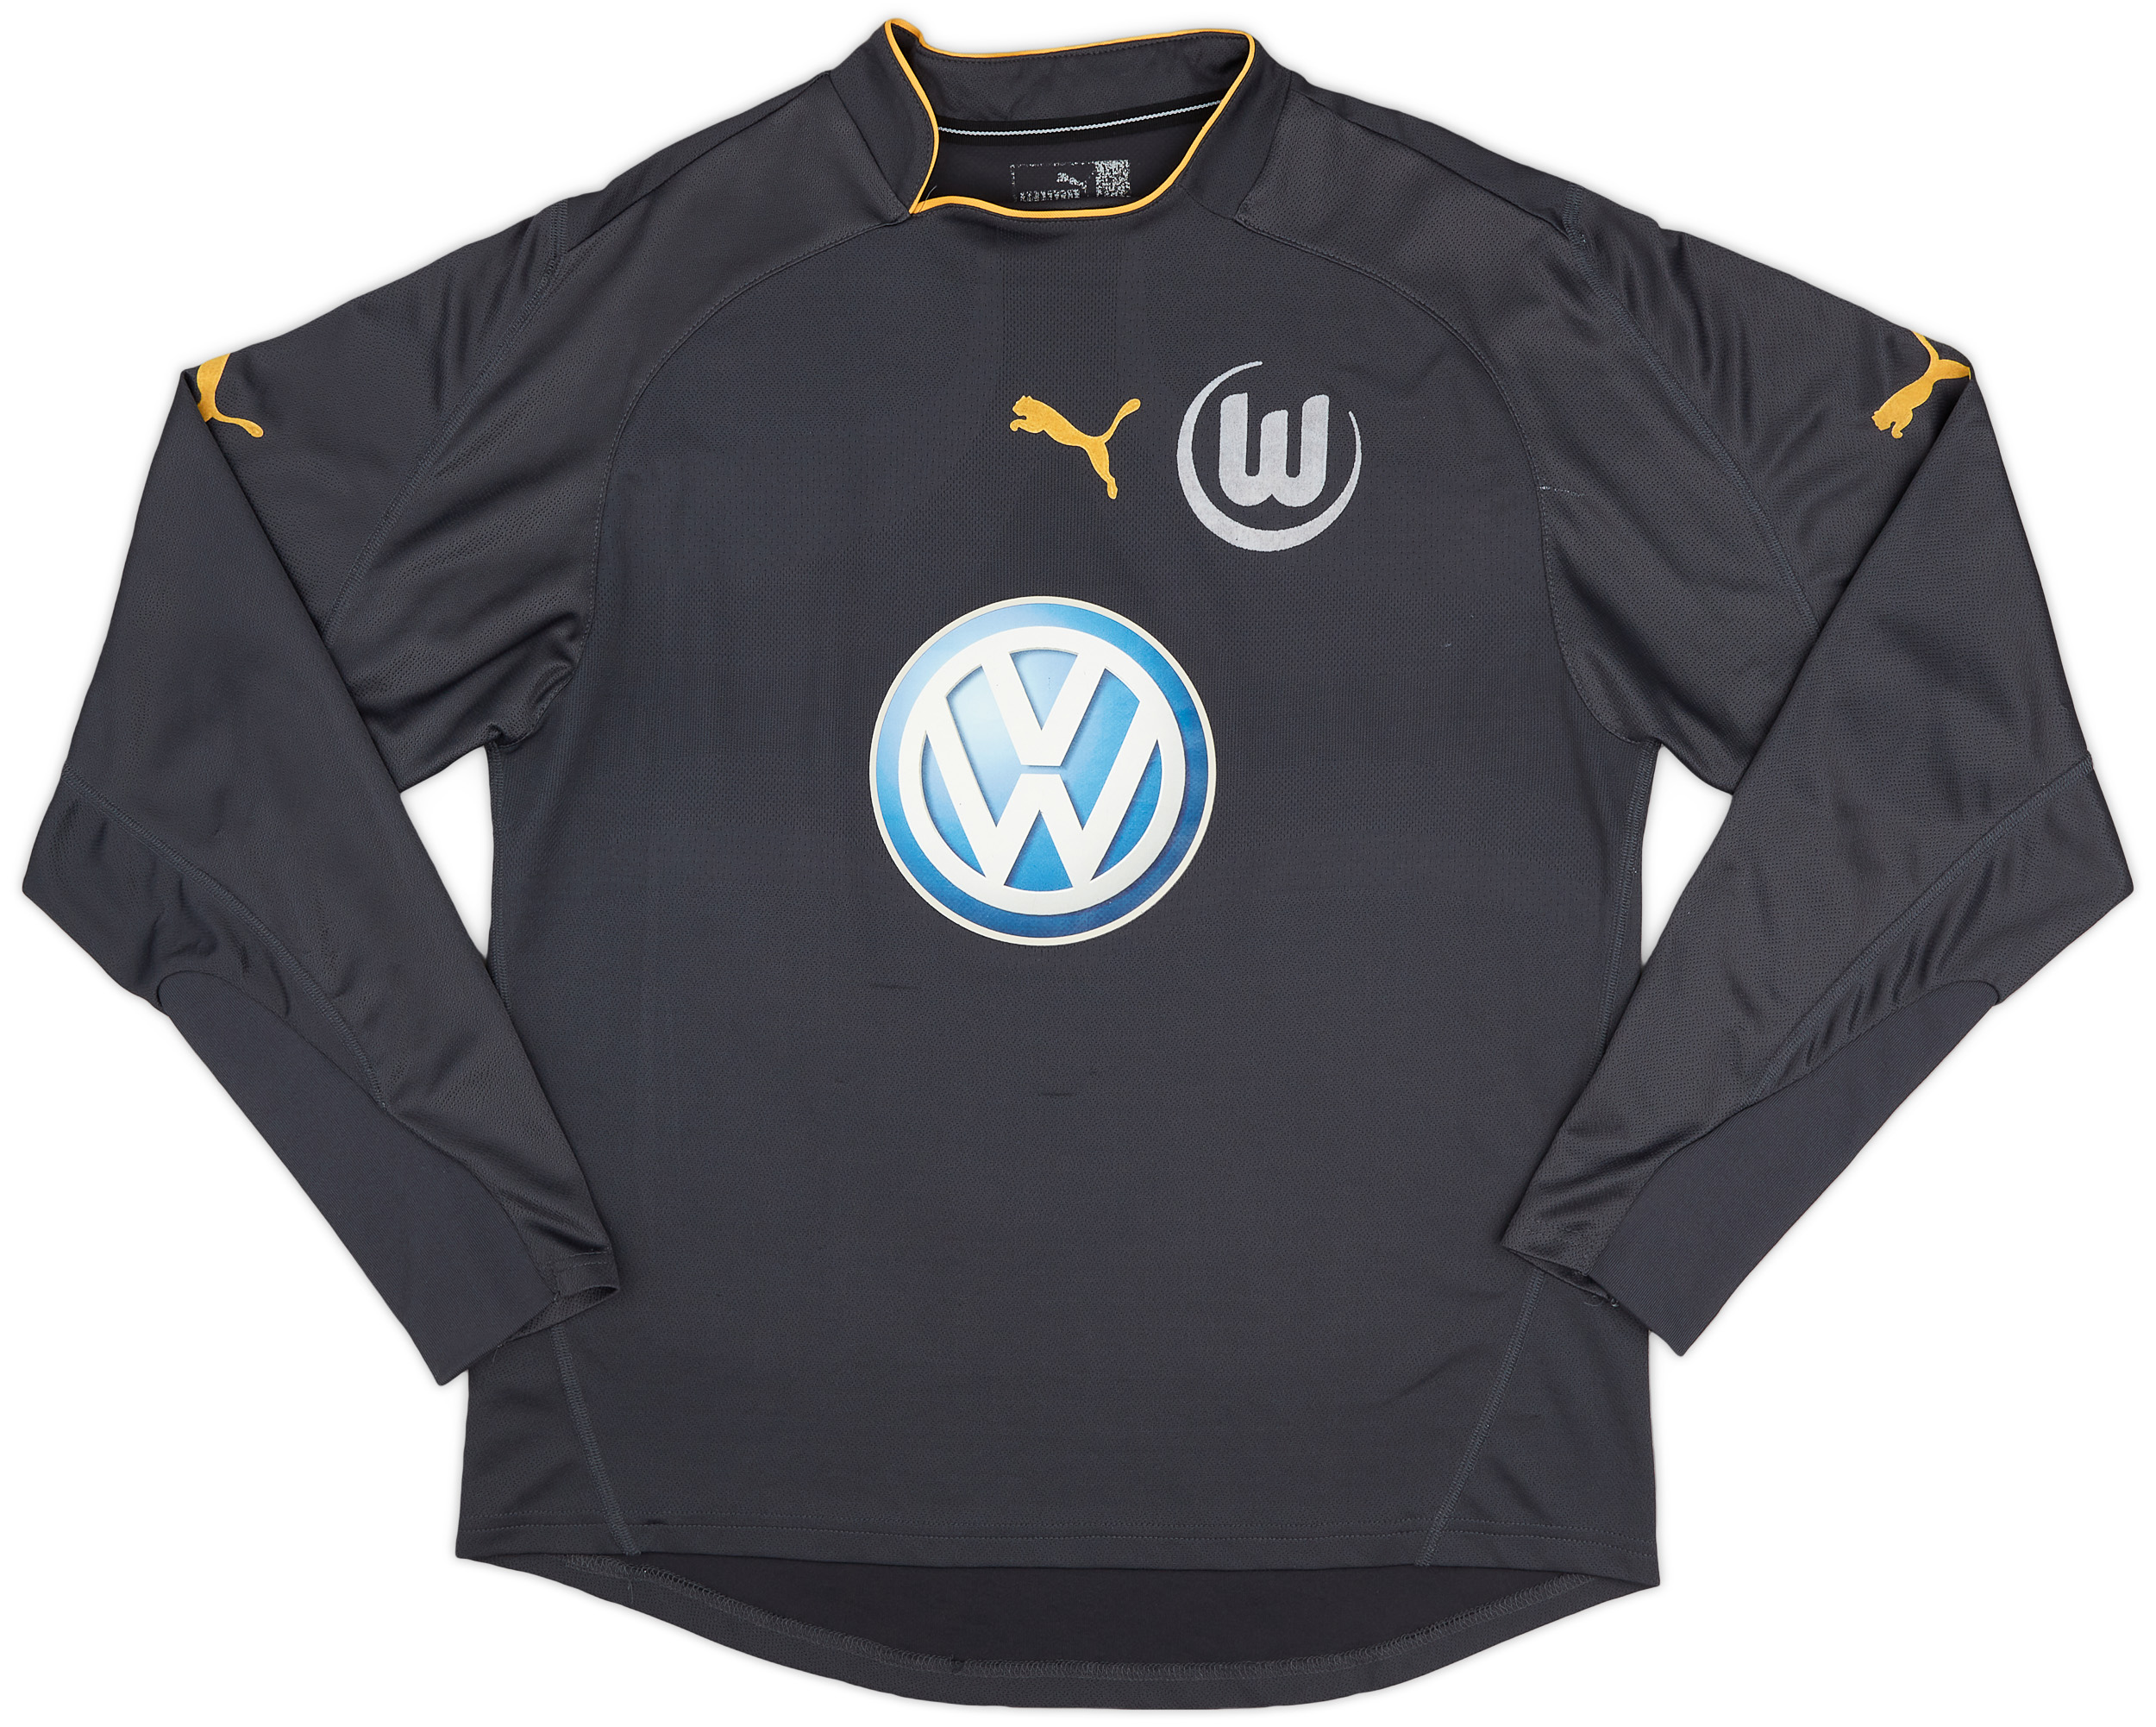 VfL Wolfsburg  Visitante Camiseta (Original)